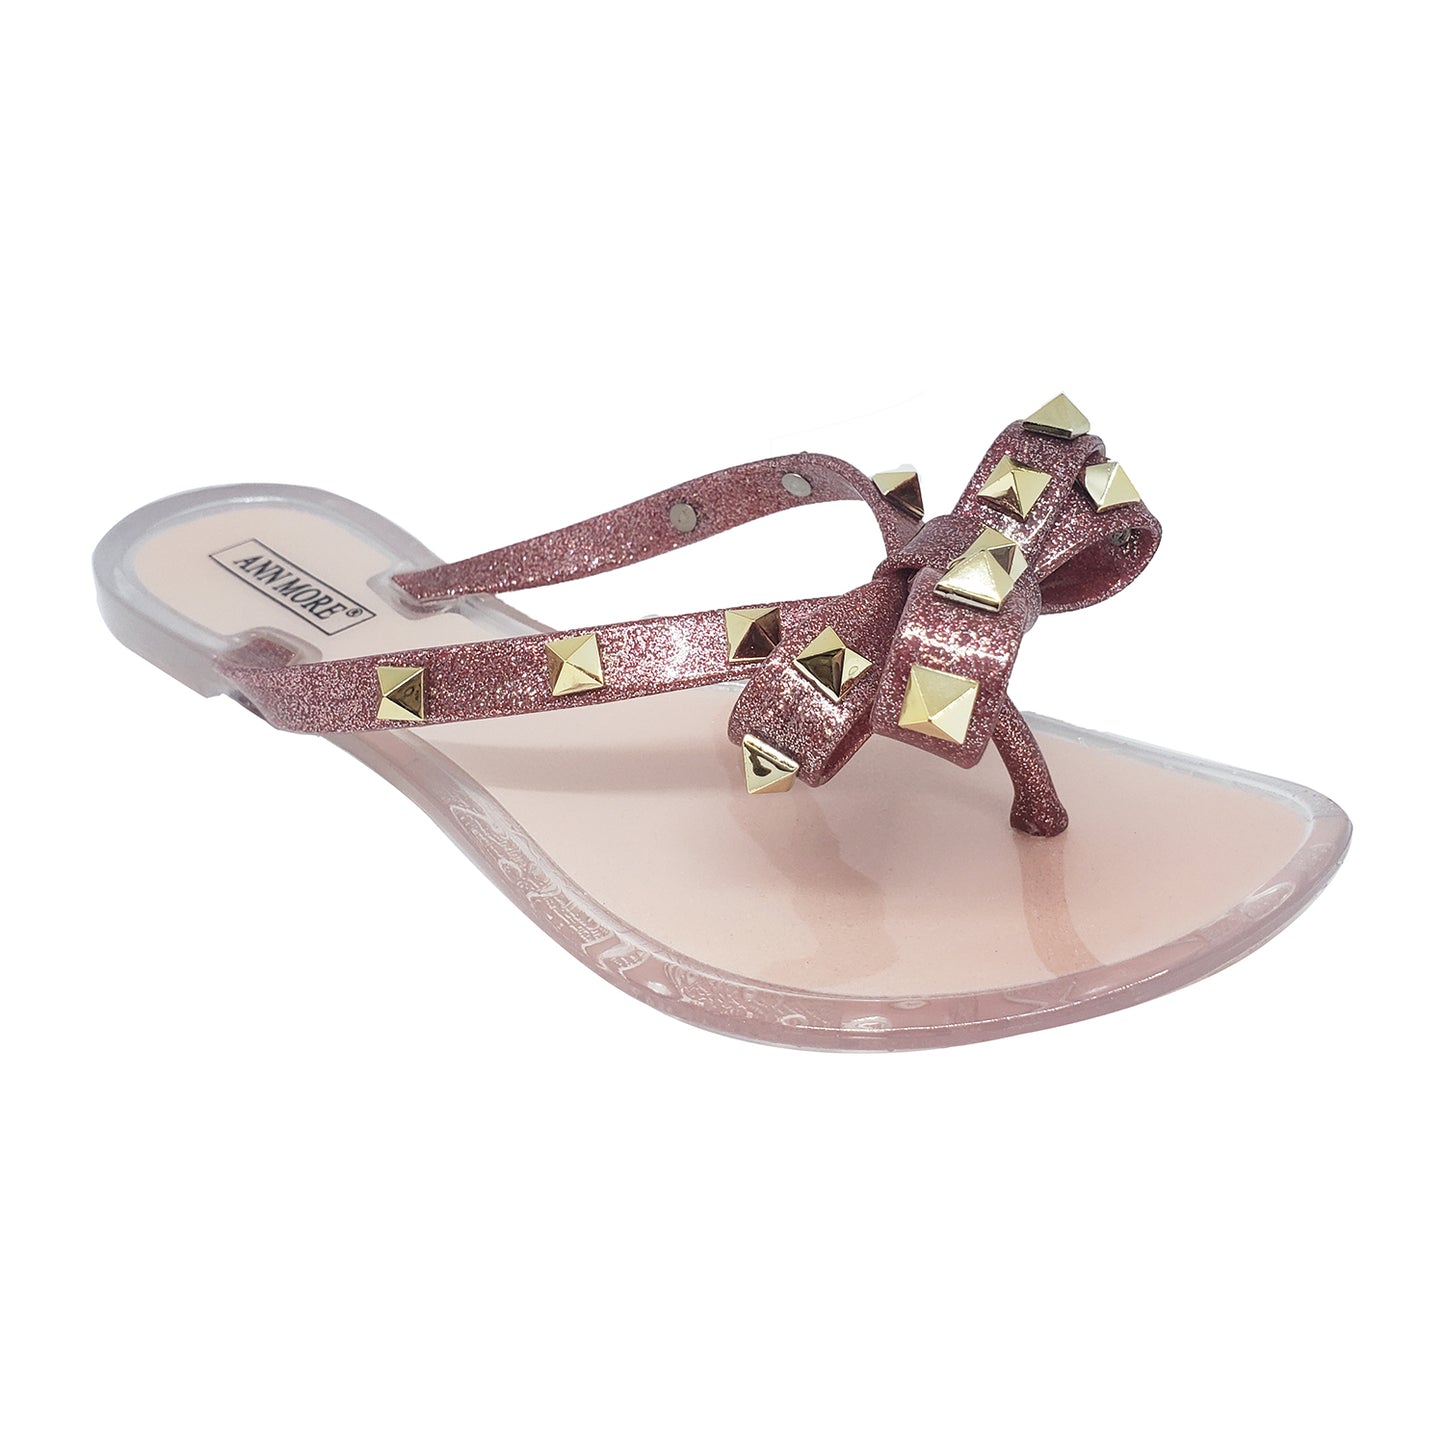 Ann More Genoa Jelly Sandals Glitter